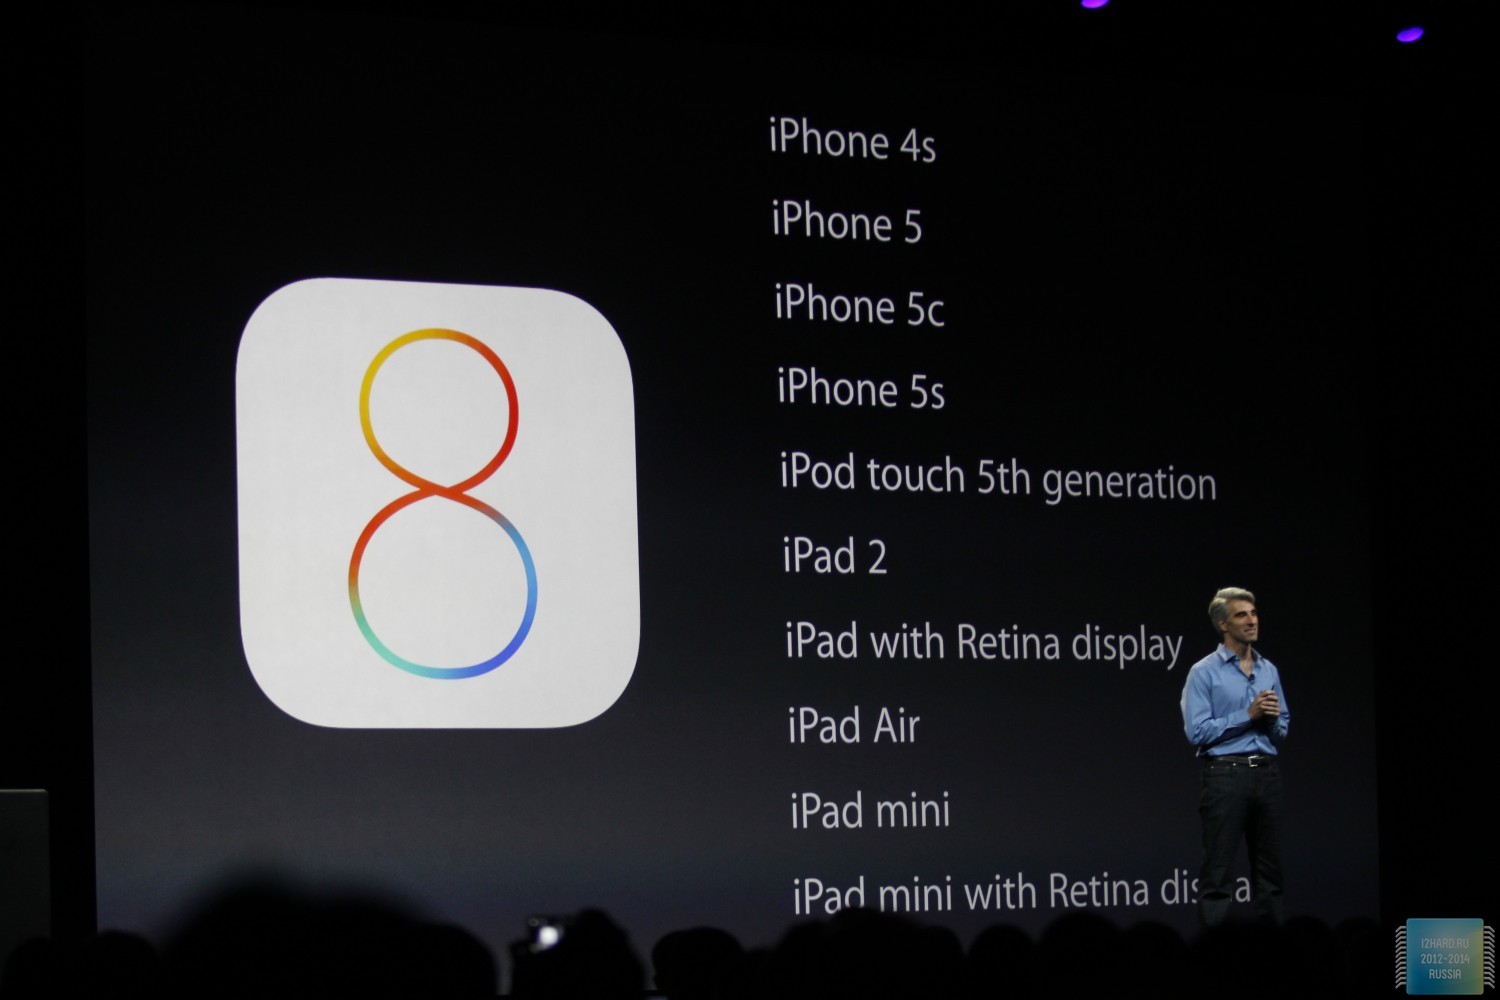  iOS 8 beta 5